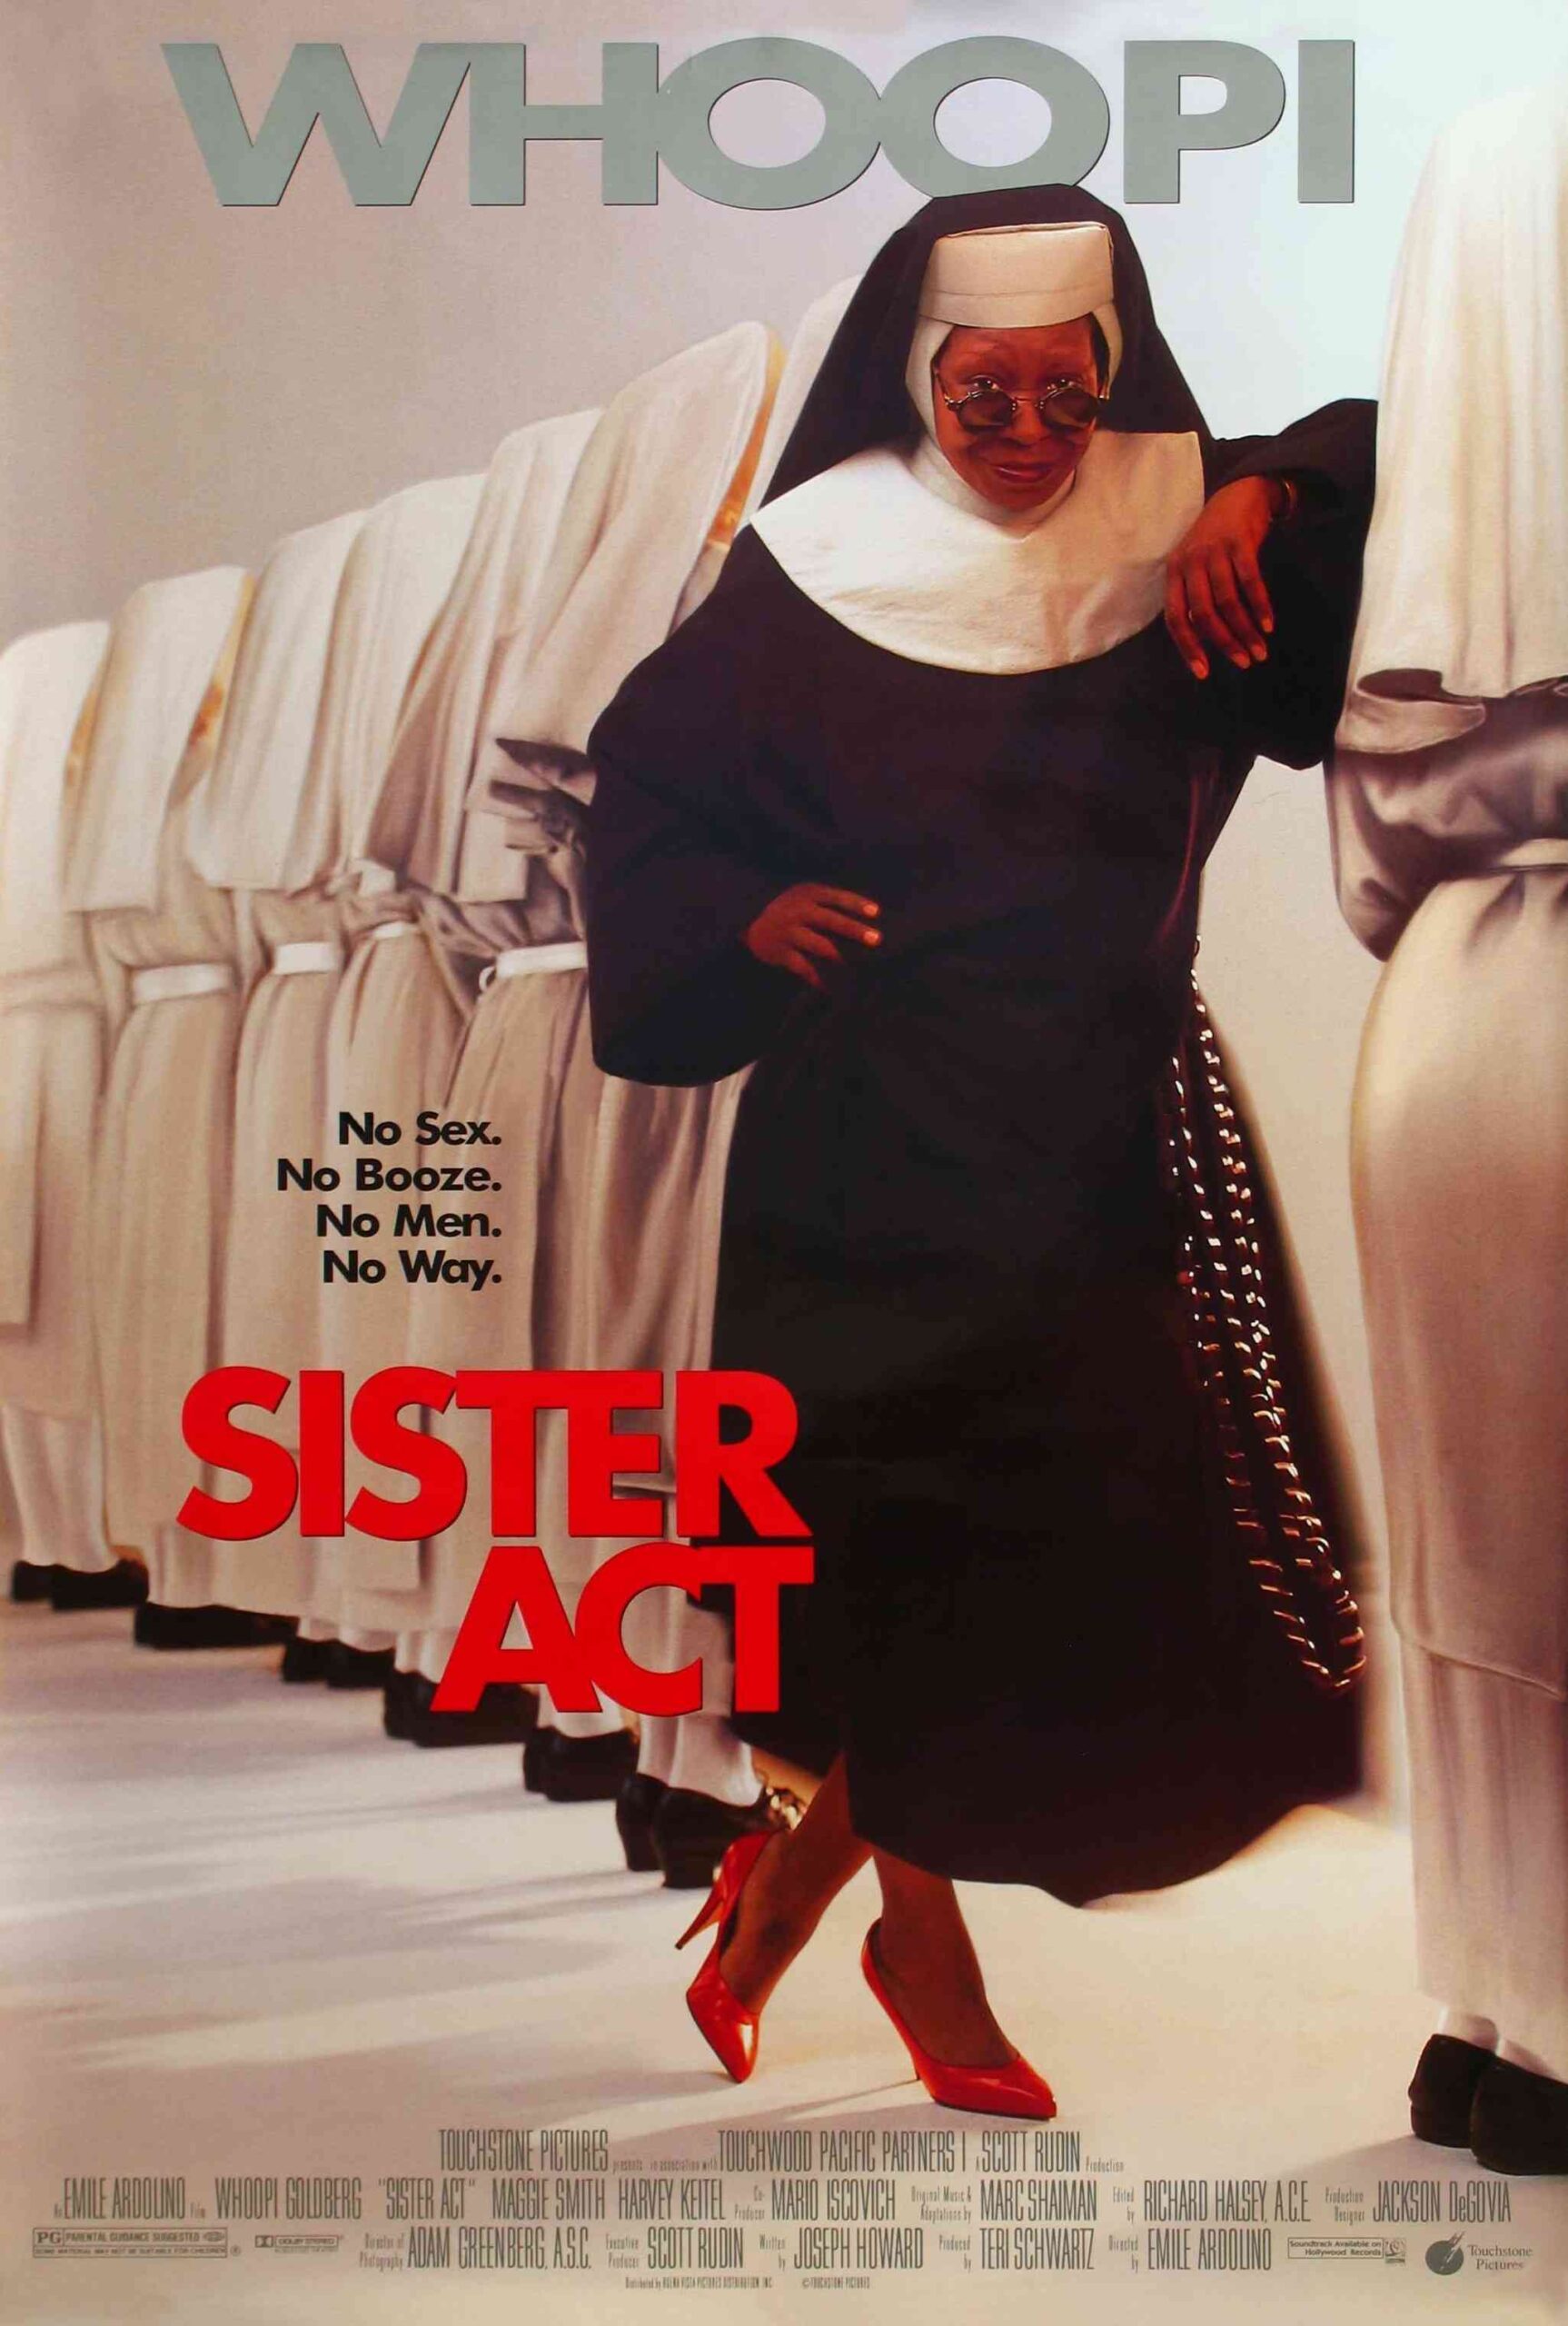 FULL MOVIE: Sister Act (1992) [Crime]